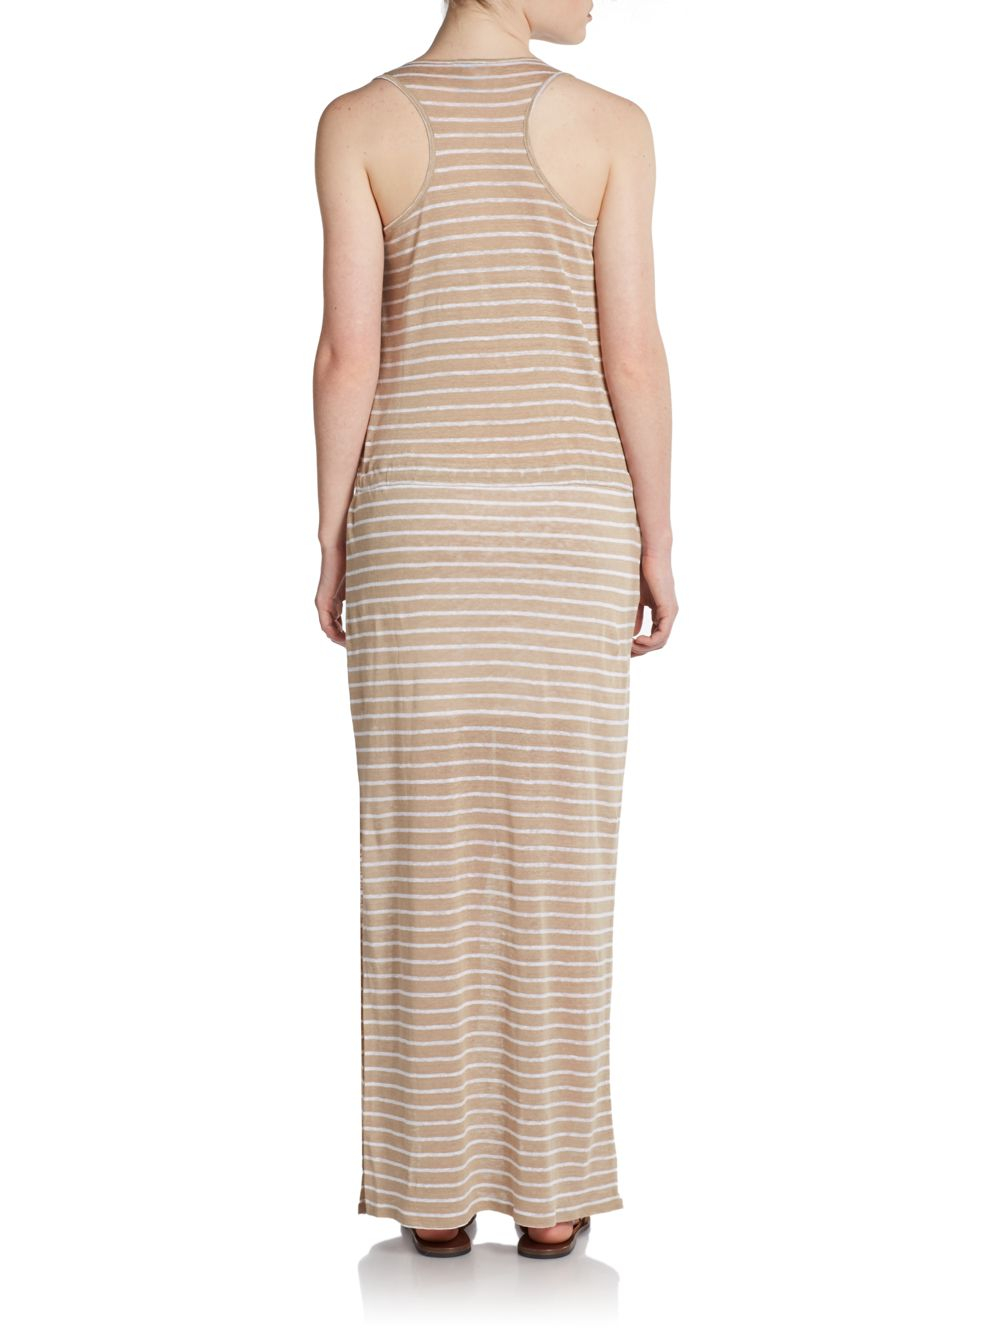 Lyst - C&C California Oceanic Striped Linen Maxi Dress in Natural